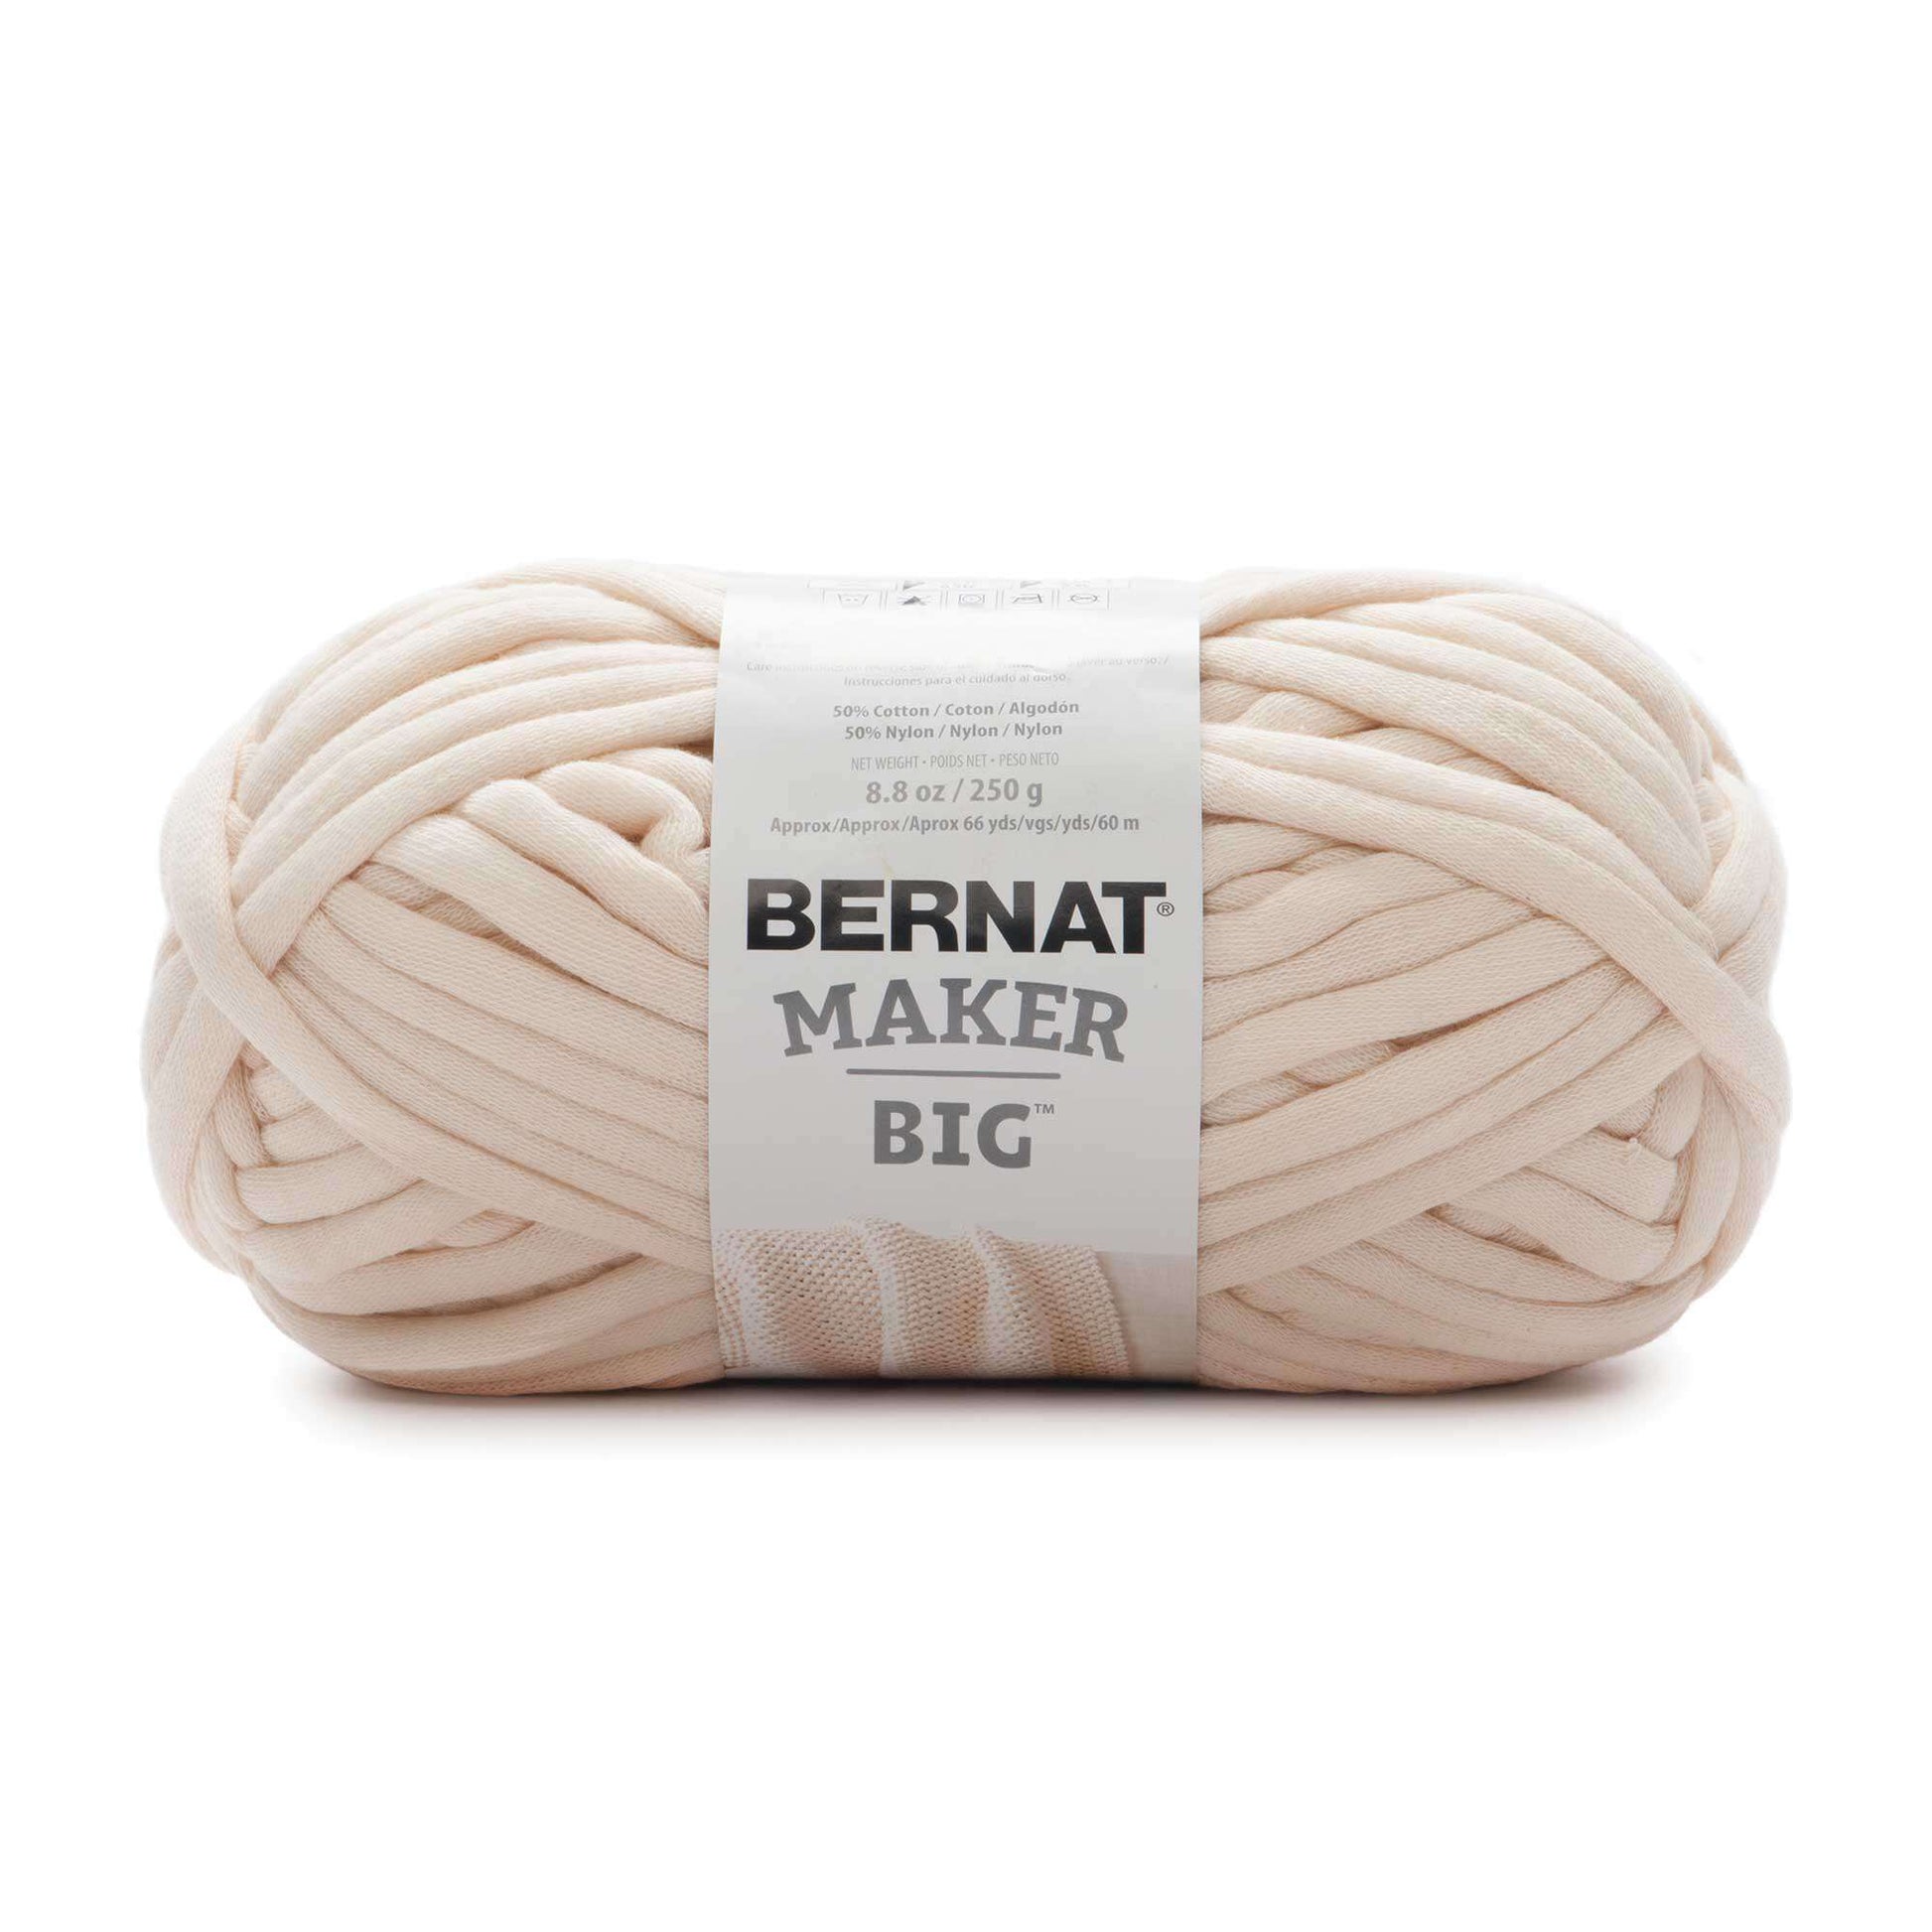 Bernat Maker Big Yarn - Discontinued | Yarnspirations